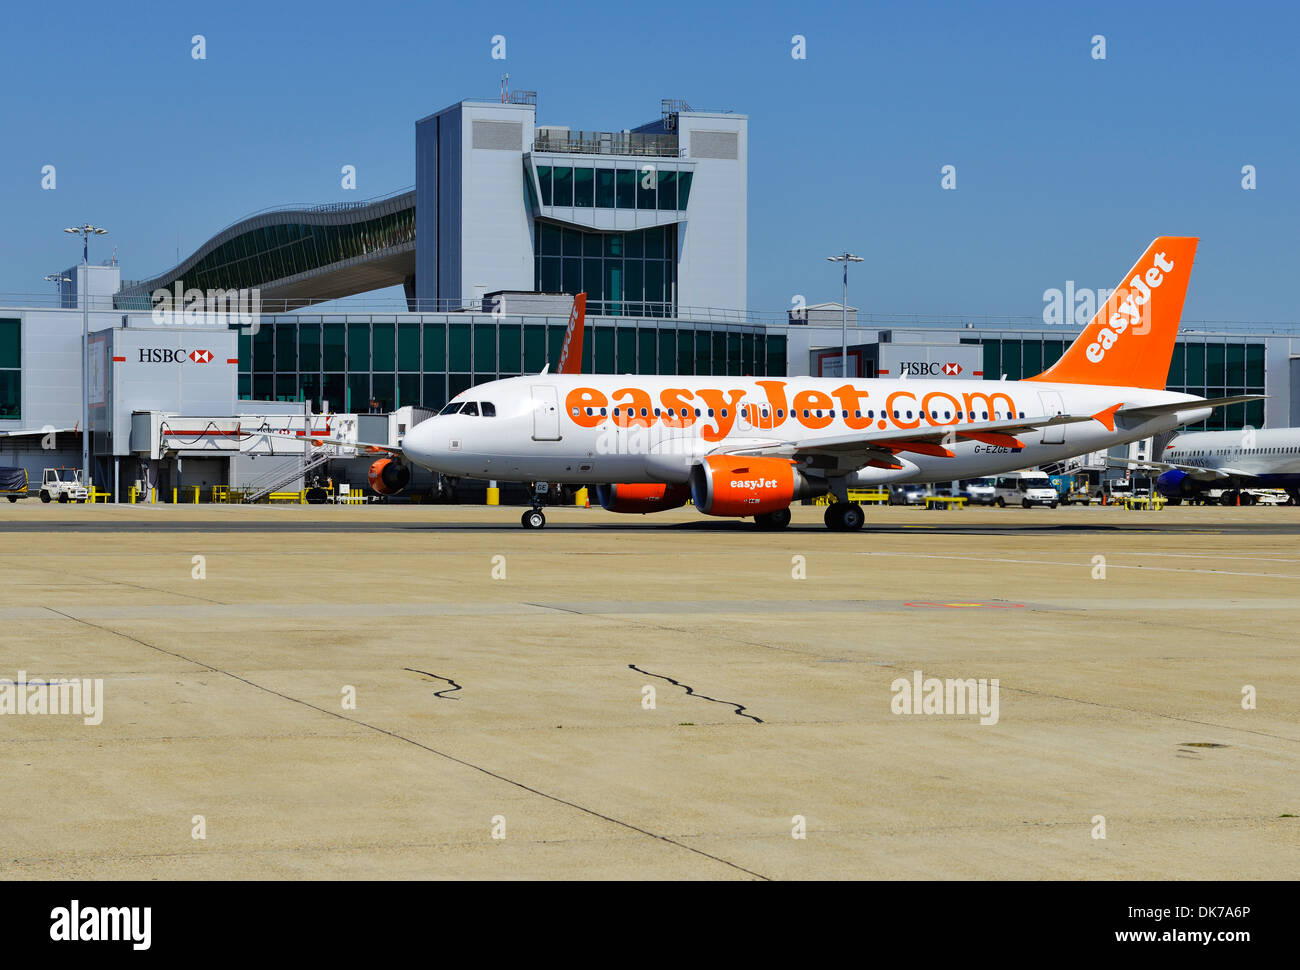 EasyJet plane, EasyJet airline, EasyJet aeroplane at Gatwick Airport Terminal, London, Britain, UK Stock Photo